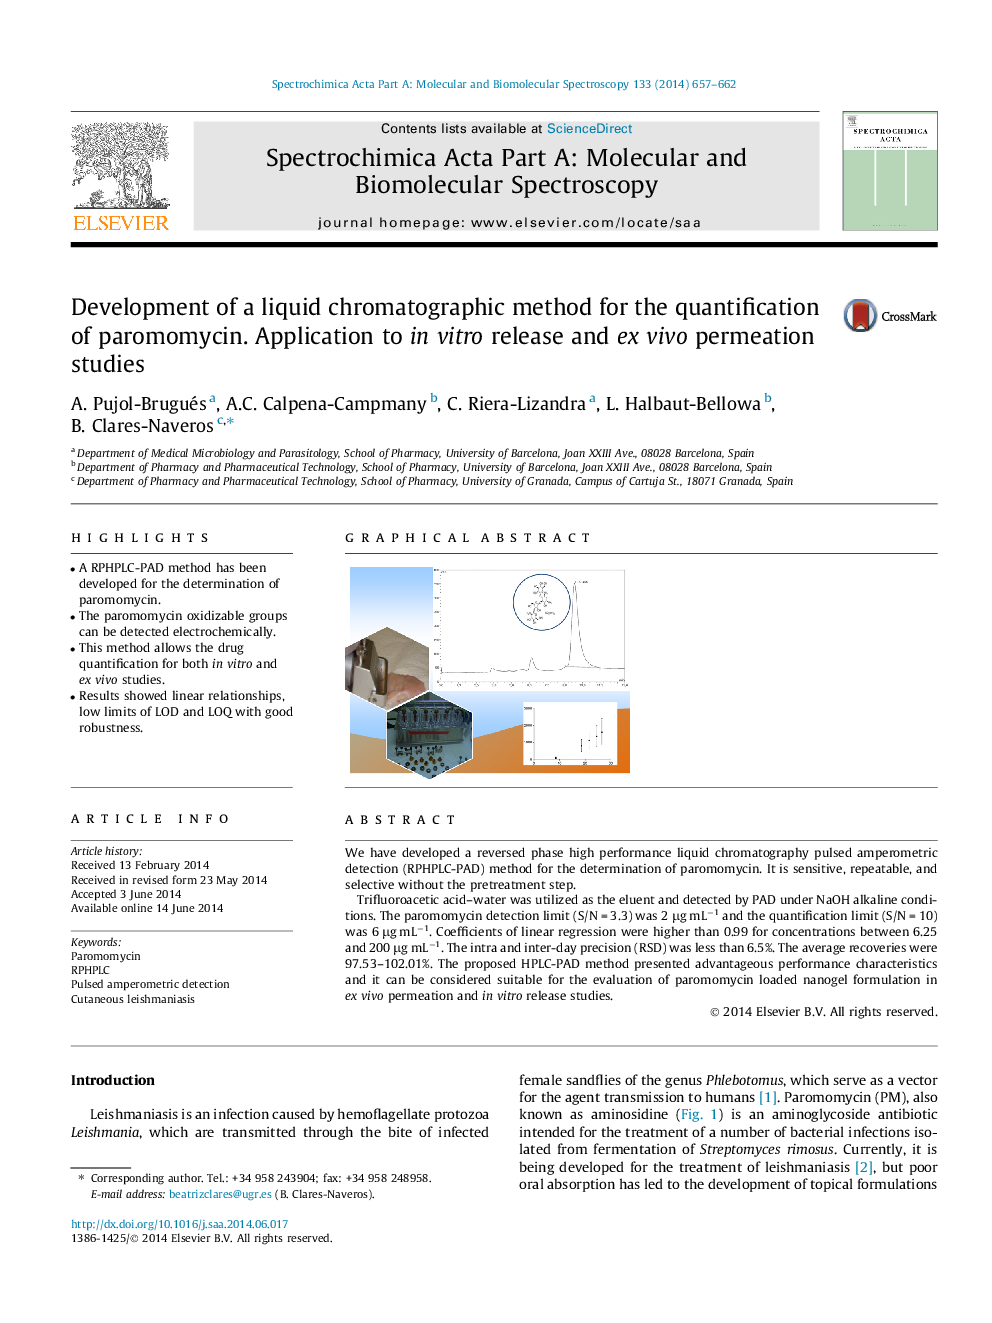 Development of a liquid chromatographic method for the quantification of paromomycin. Application to in vitro release and ex vivo permeation studies